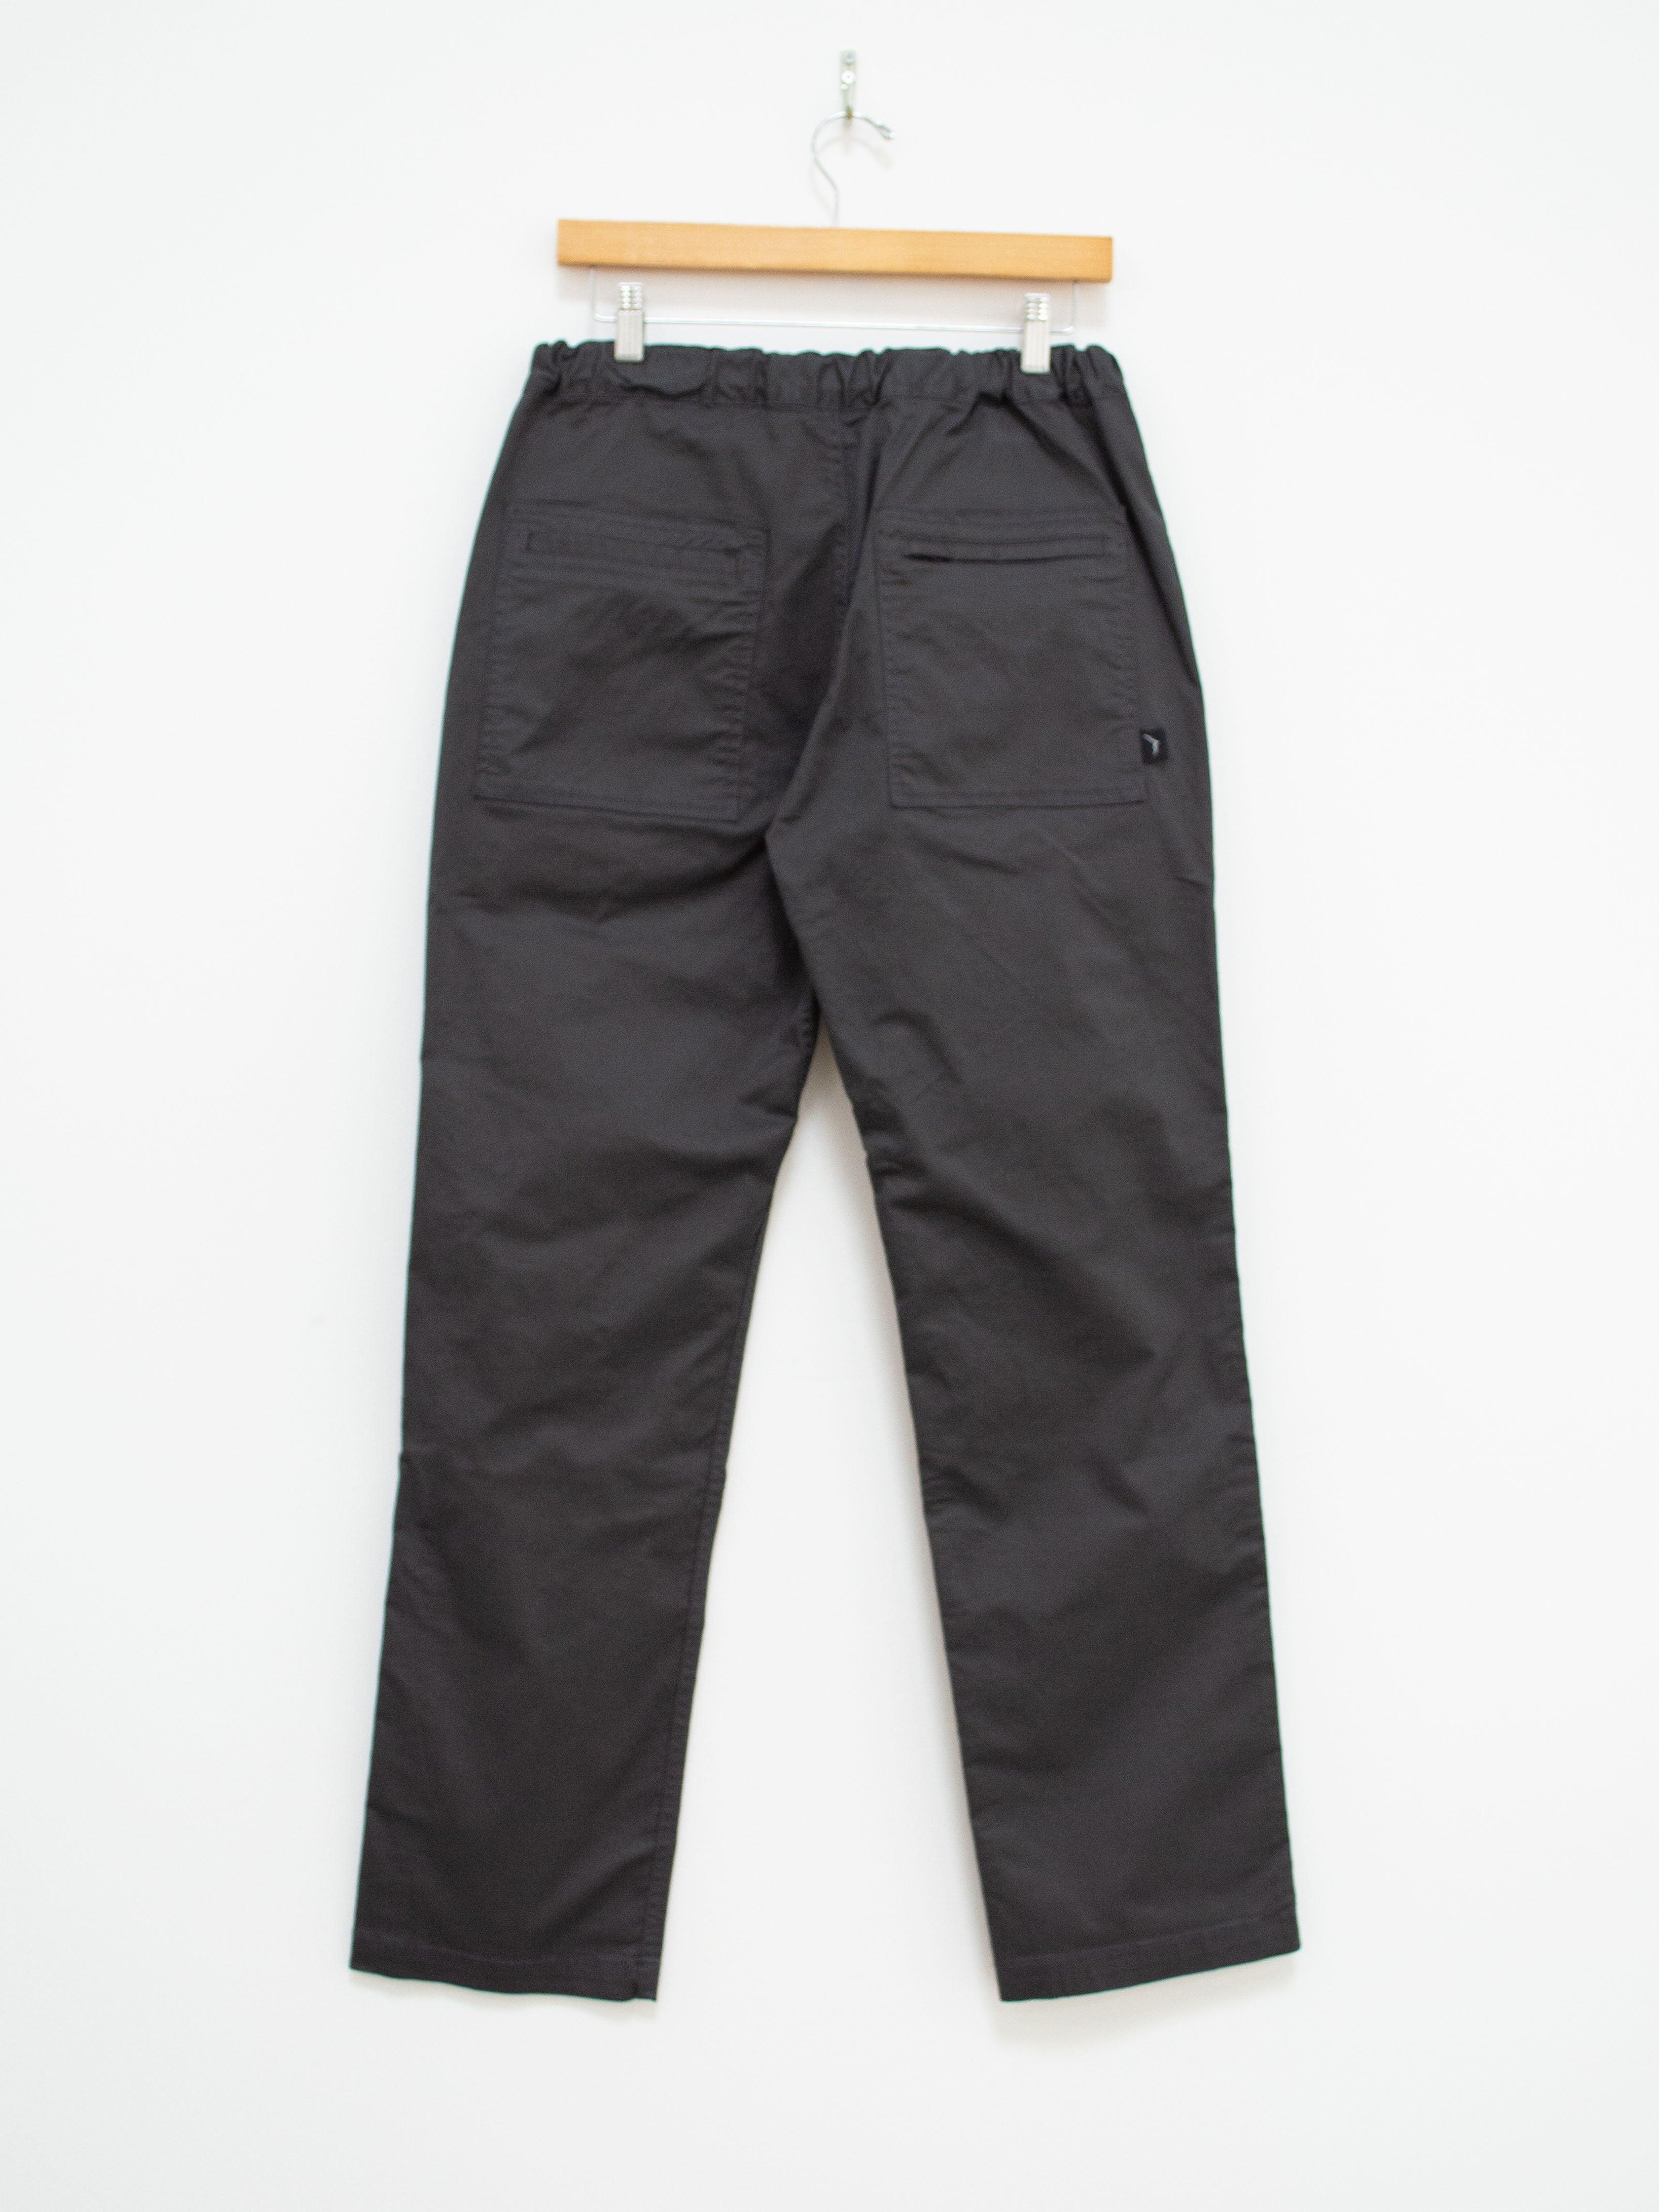 Namu Shop - CAYL Lip Pocket Climbing Pants - Charcoal Gray